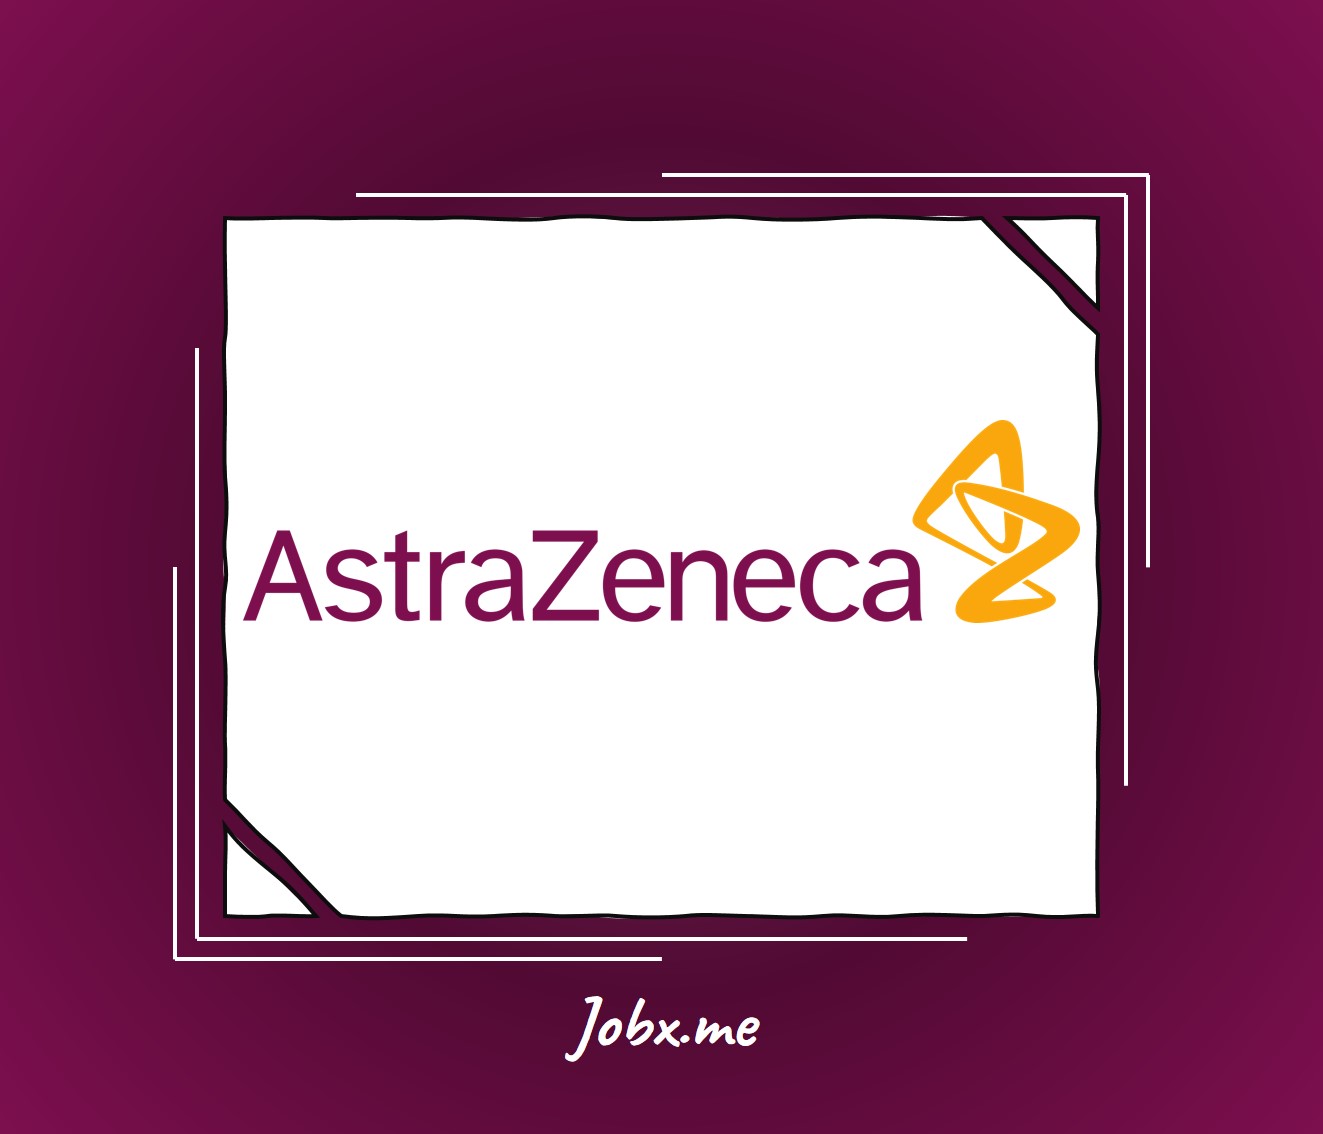 Astrazeneca Careers